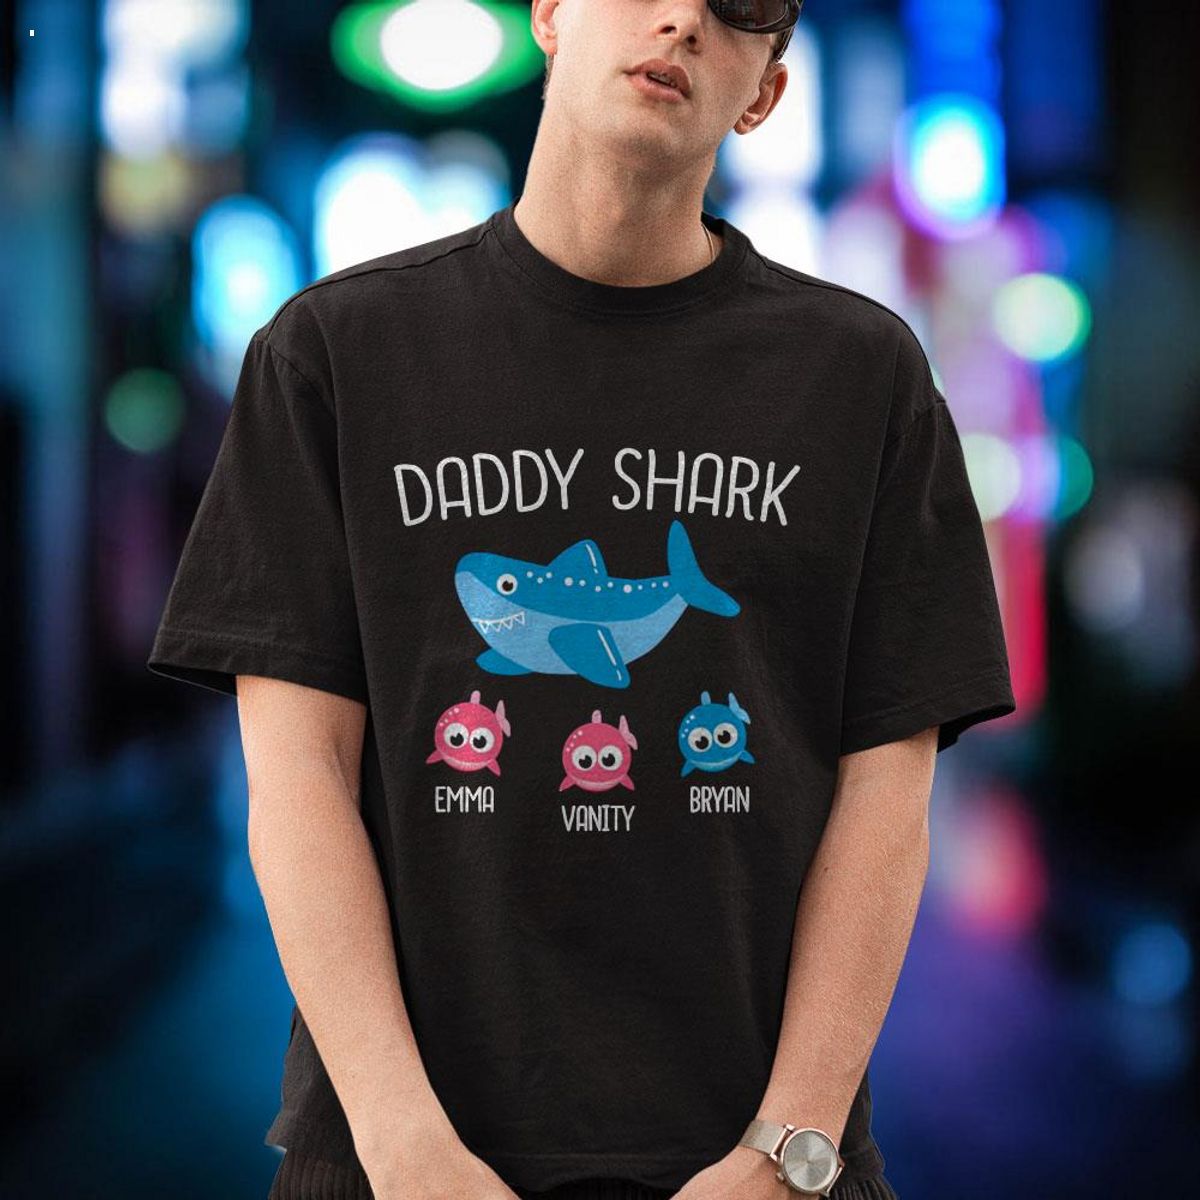 Lovelypod - Personalized Grandpa Shark Shirt, Daddy Shark Shirt